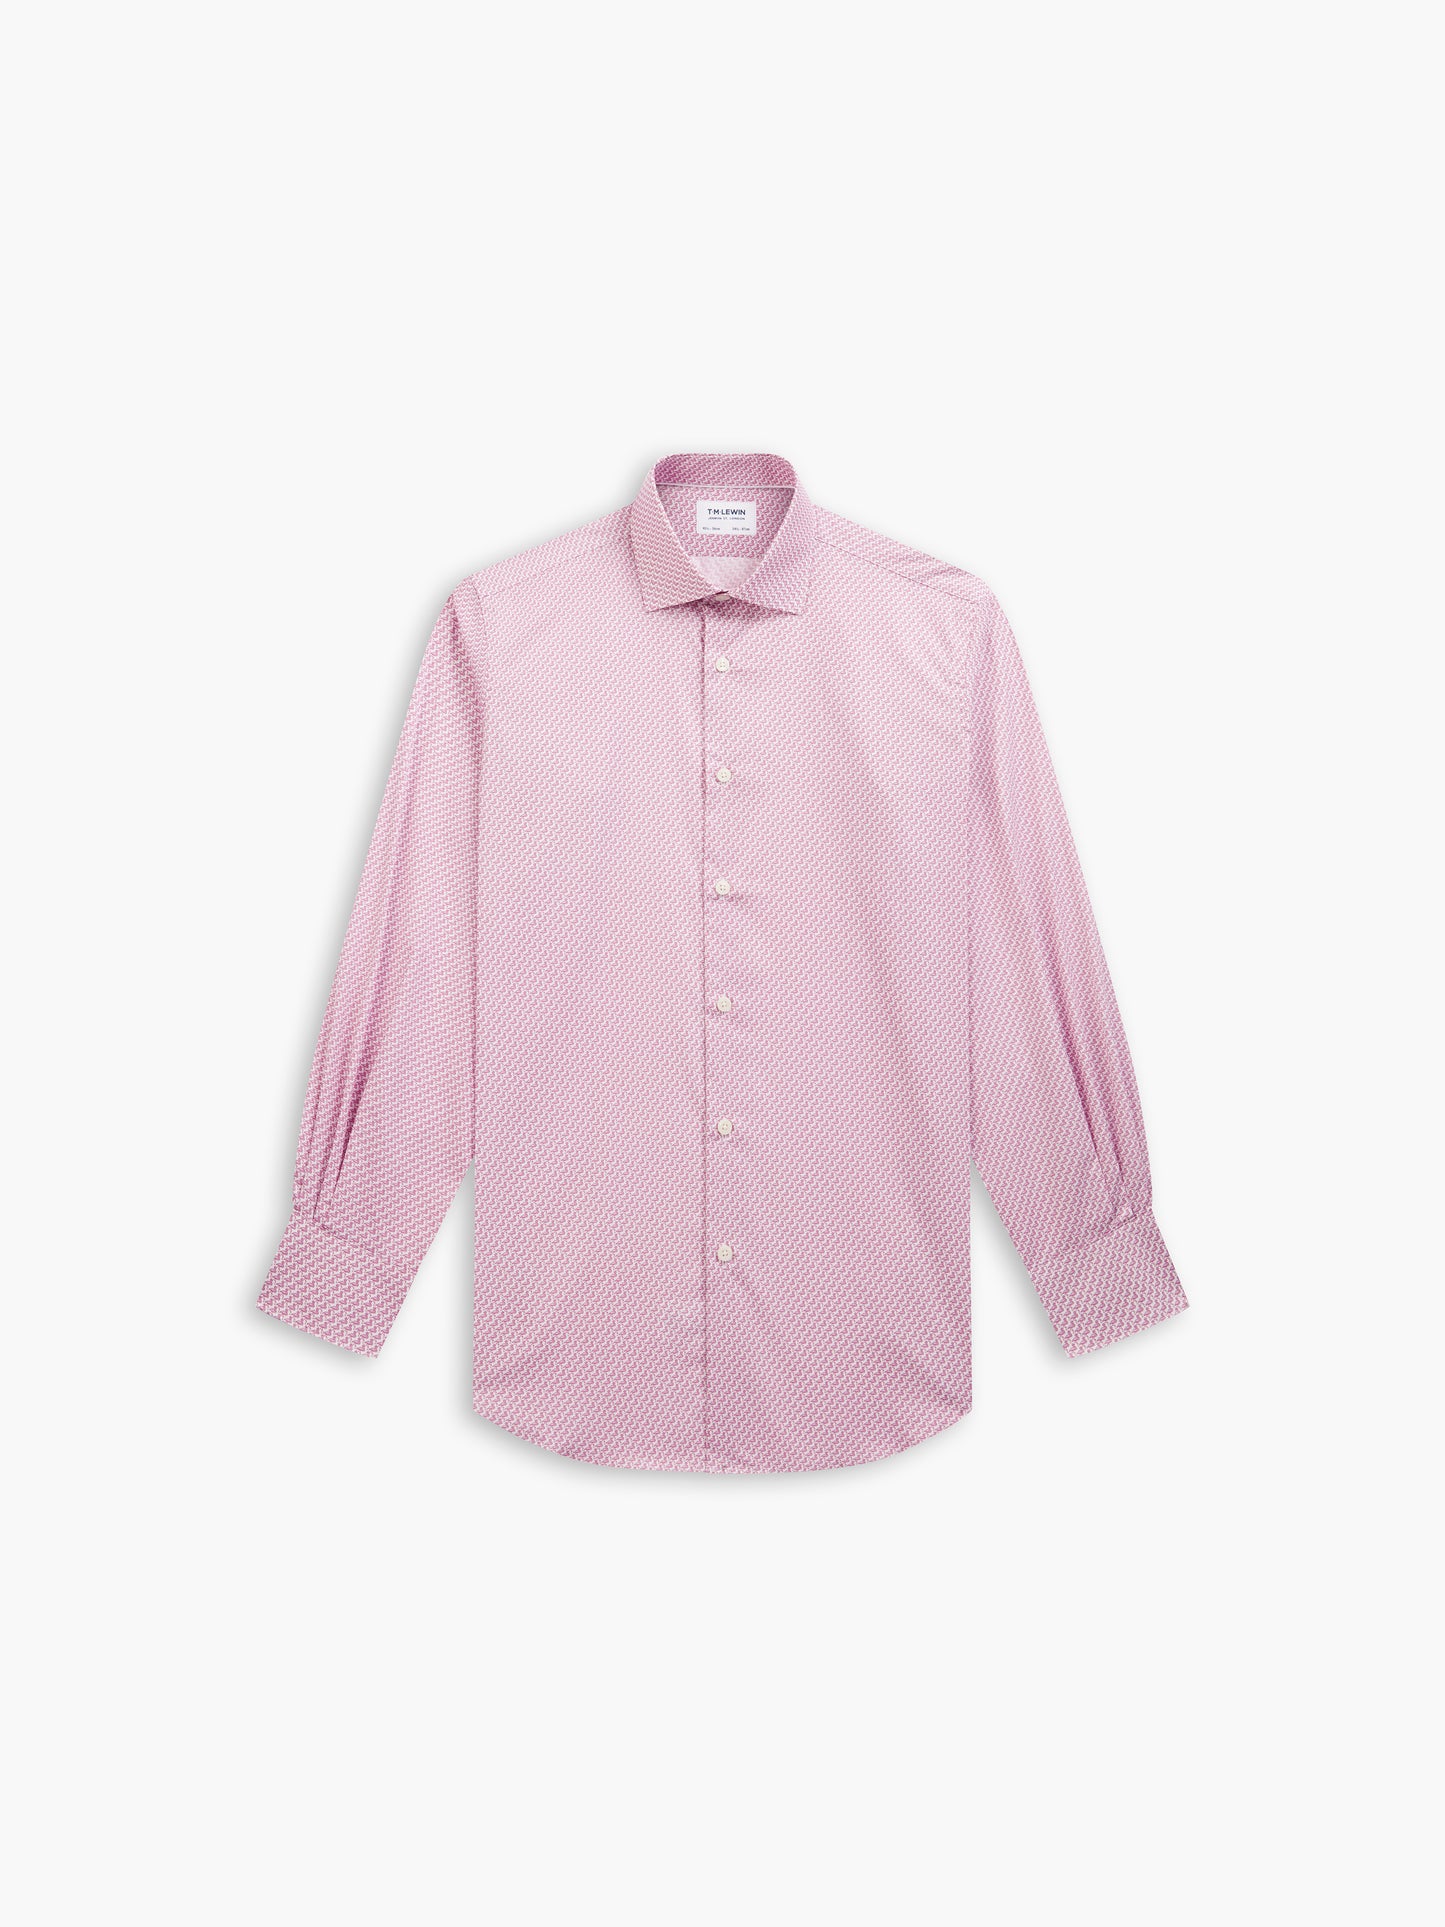 Max Cool Pink Flamingo Animal Print Twill Slim Fit Single Cuff Classic Collar Shirt